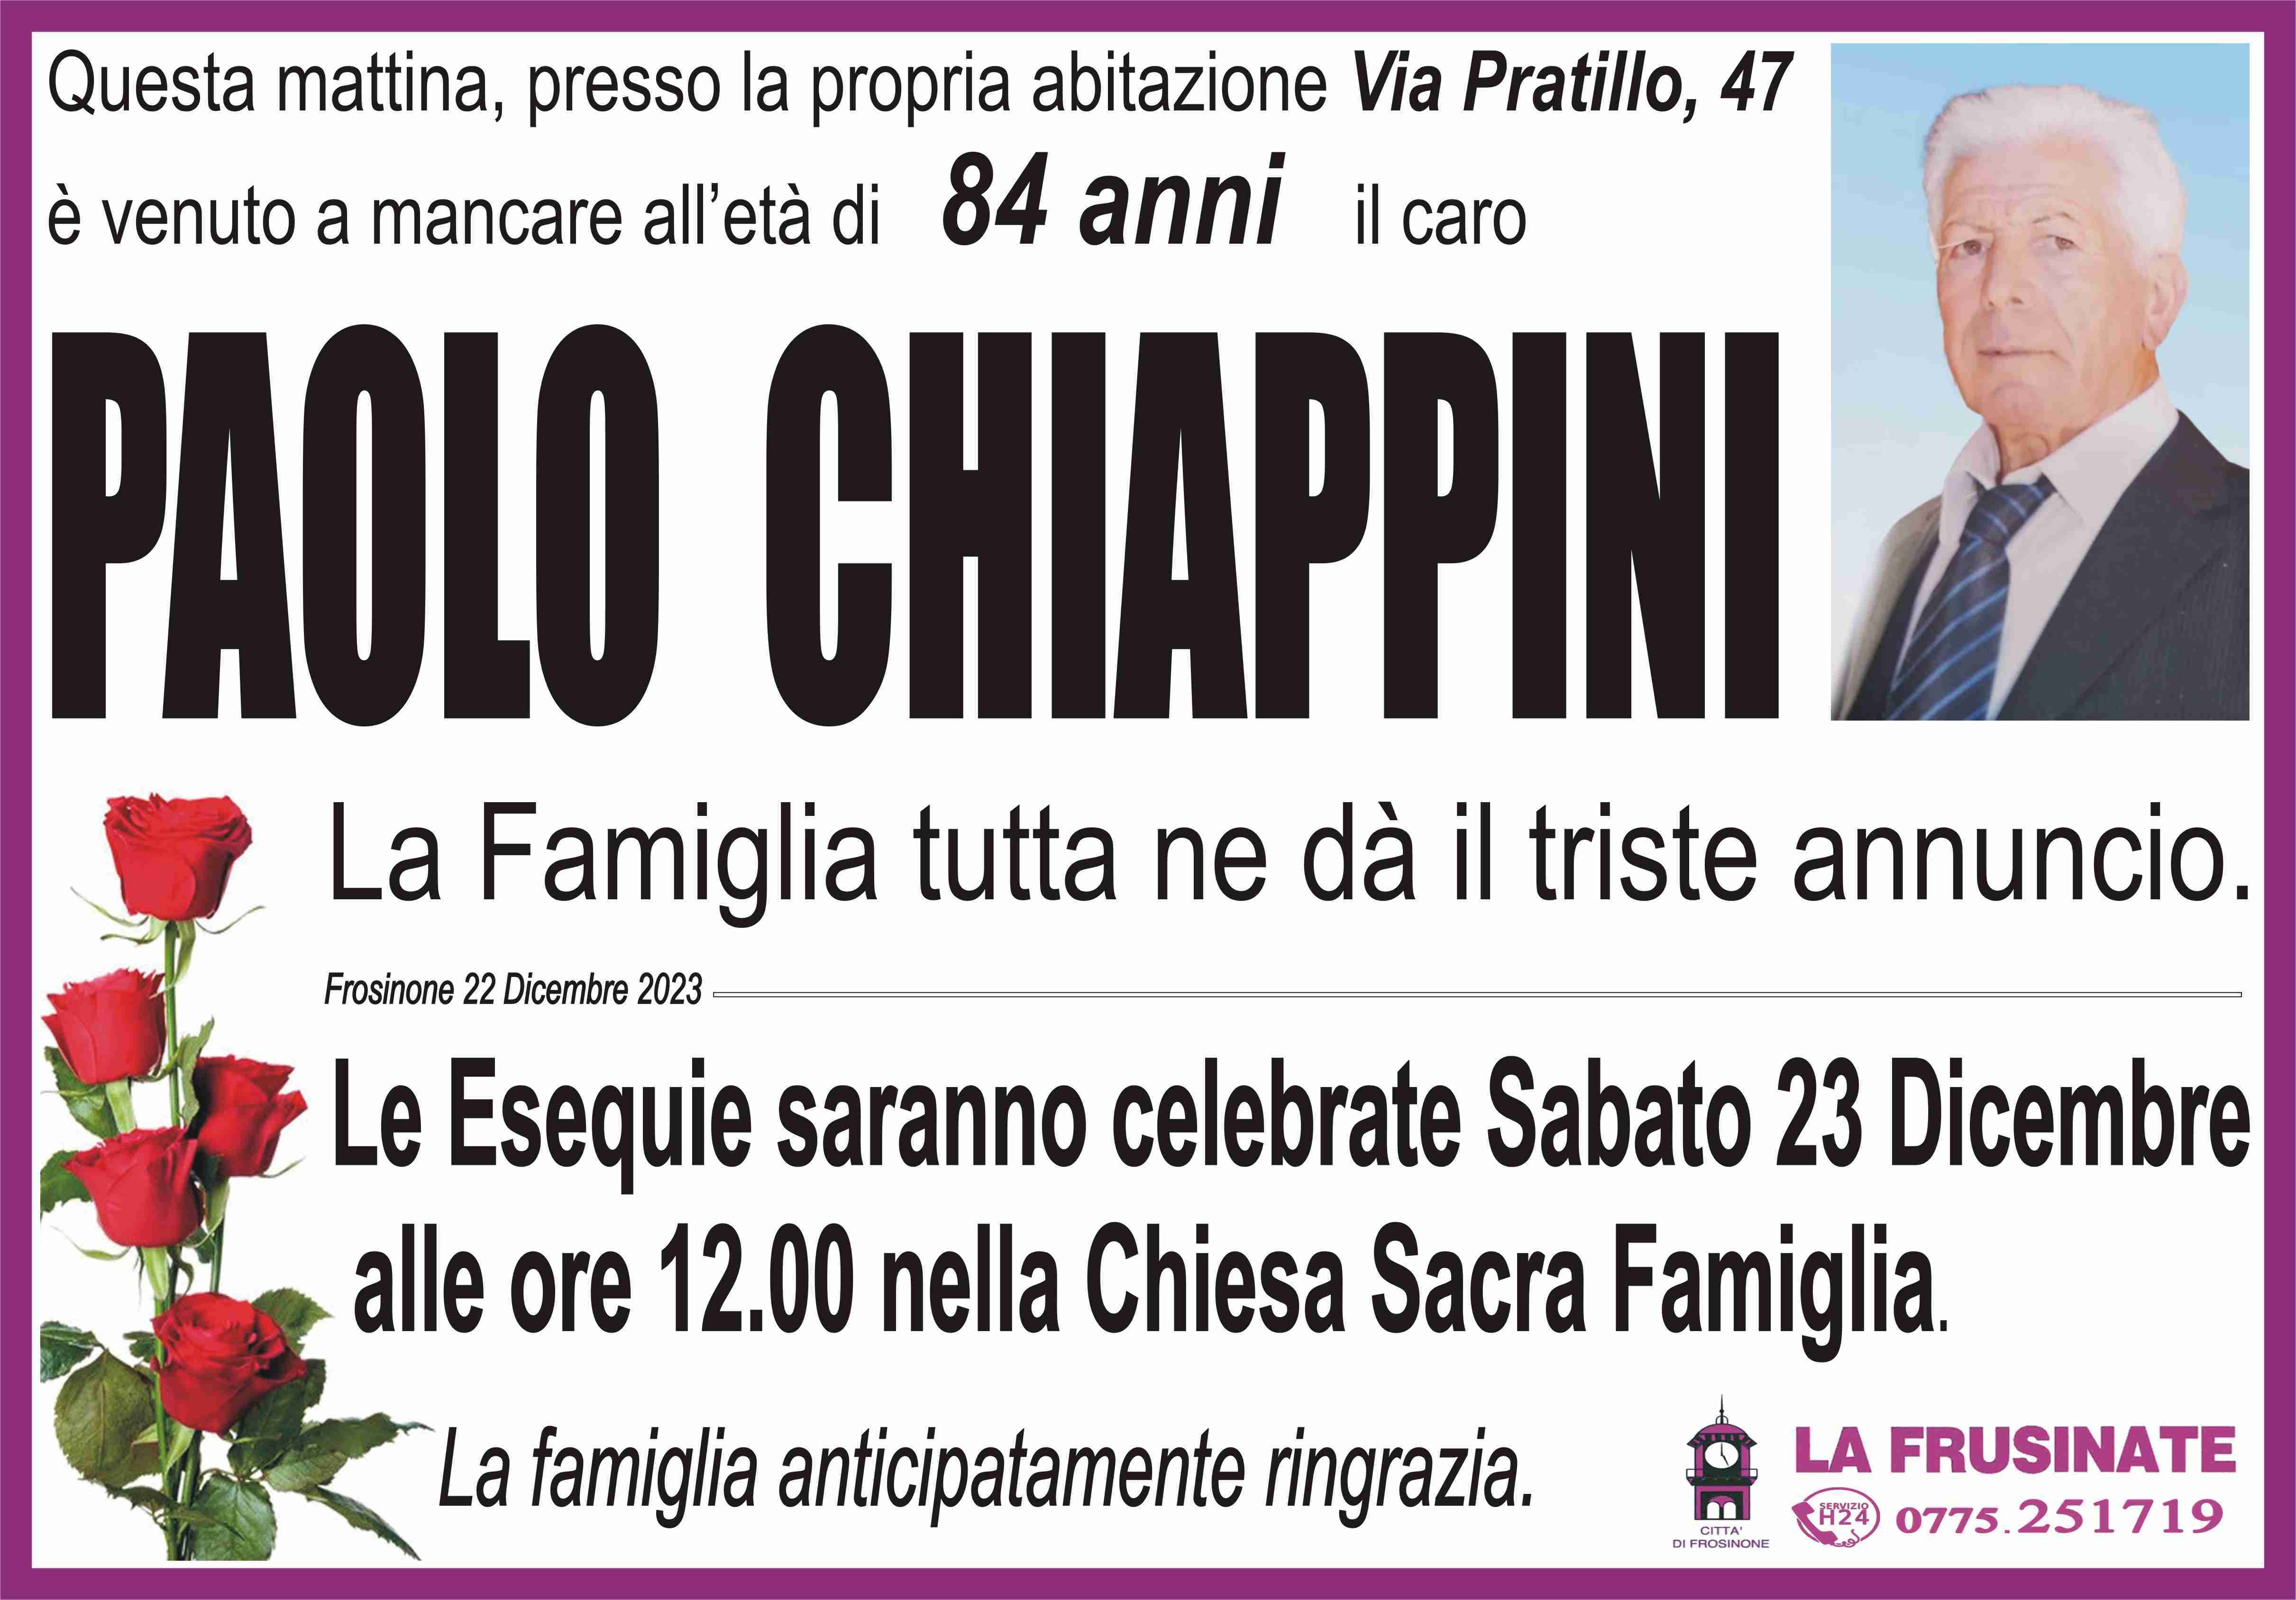 Paolo Chiappini